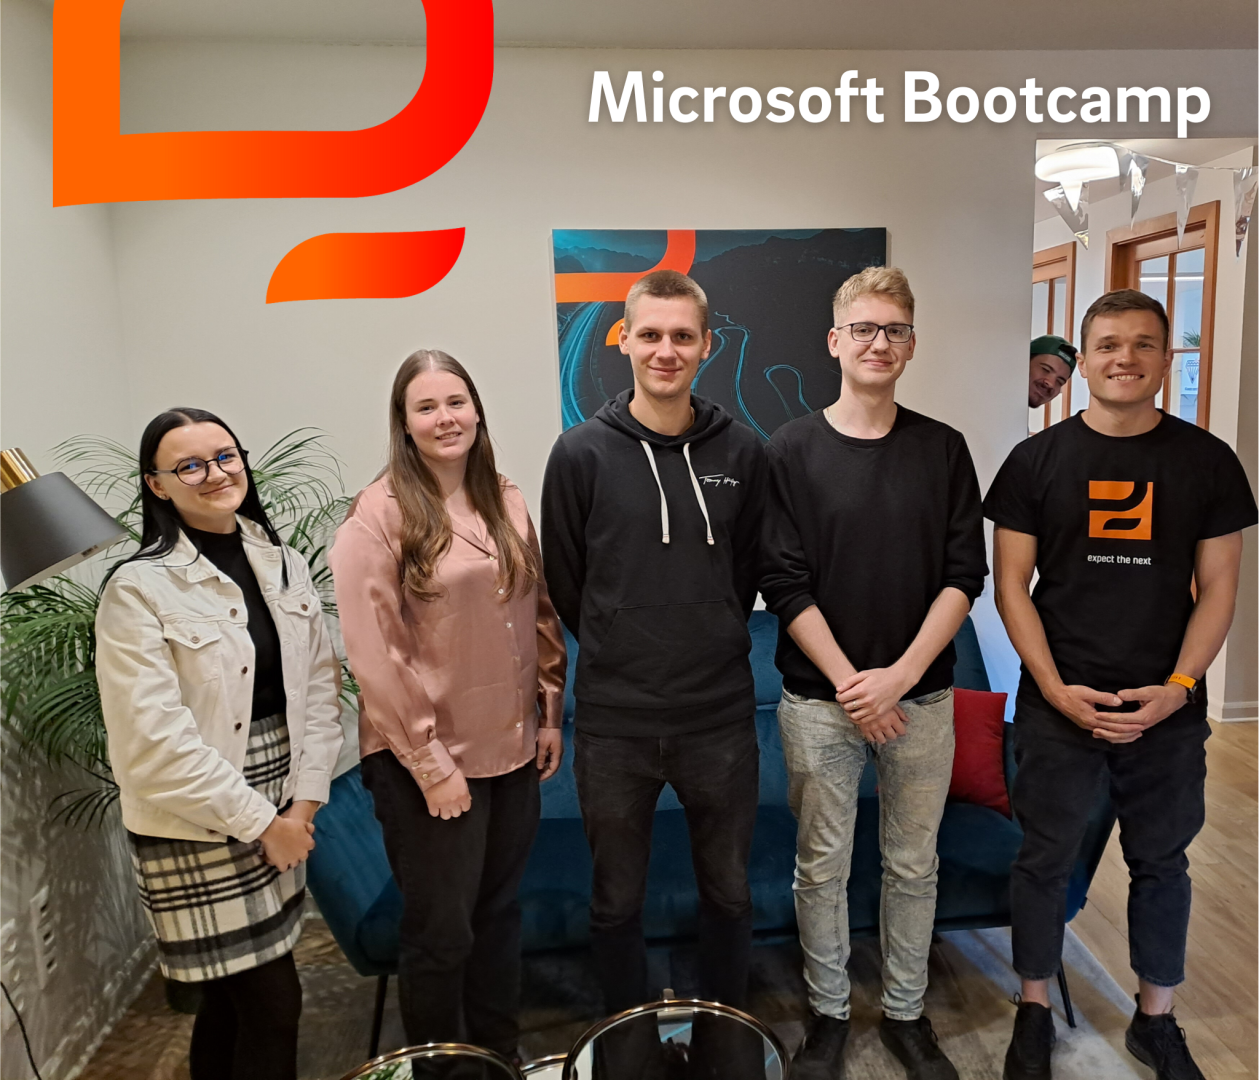 Microsoft Bootcamp officially kicks off